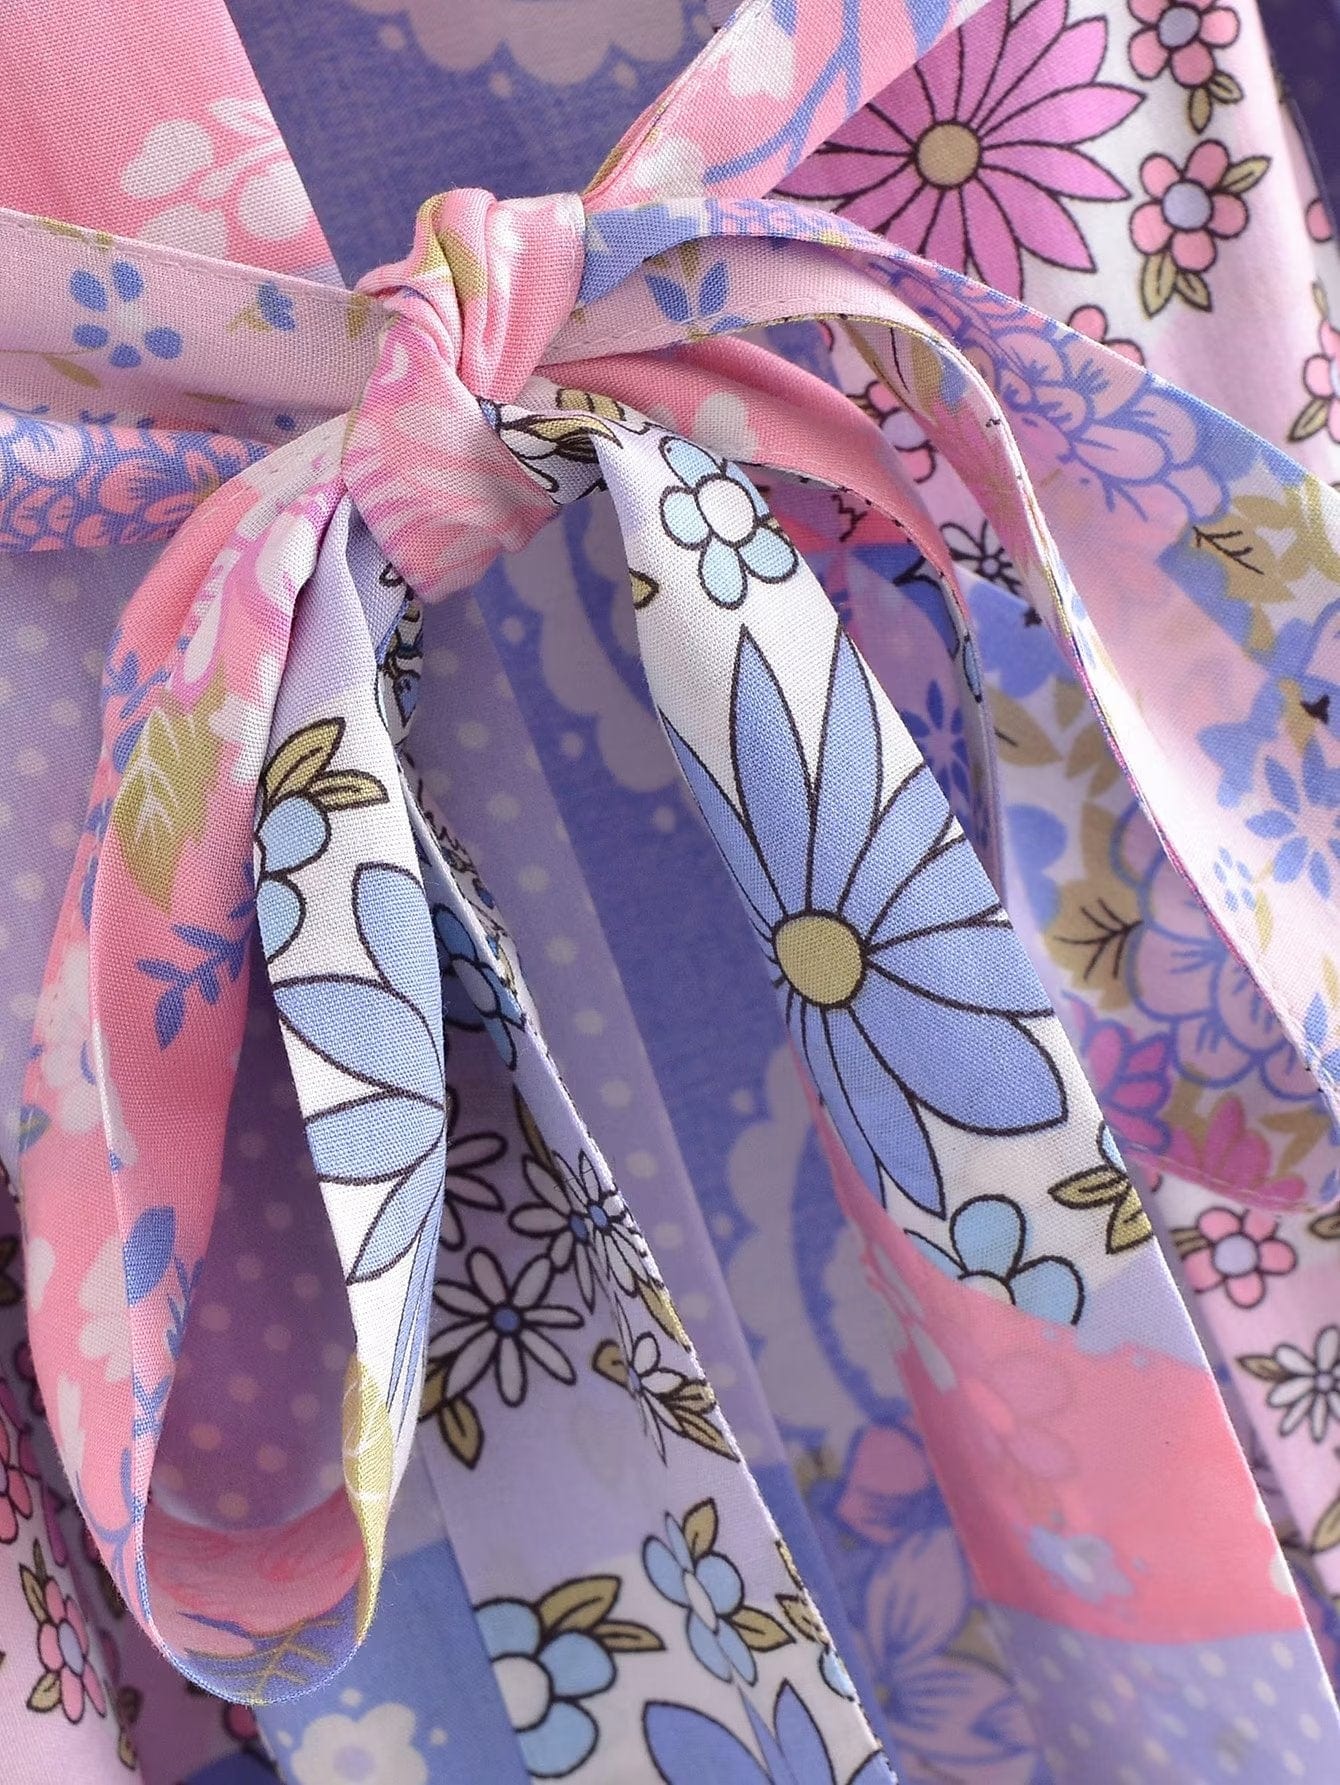 wickedafstore Orchid Boho Kimono Robe